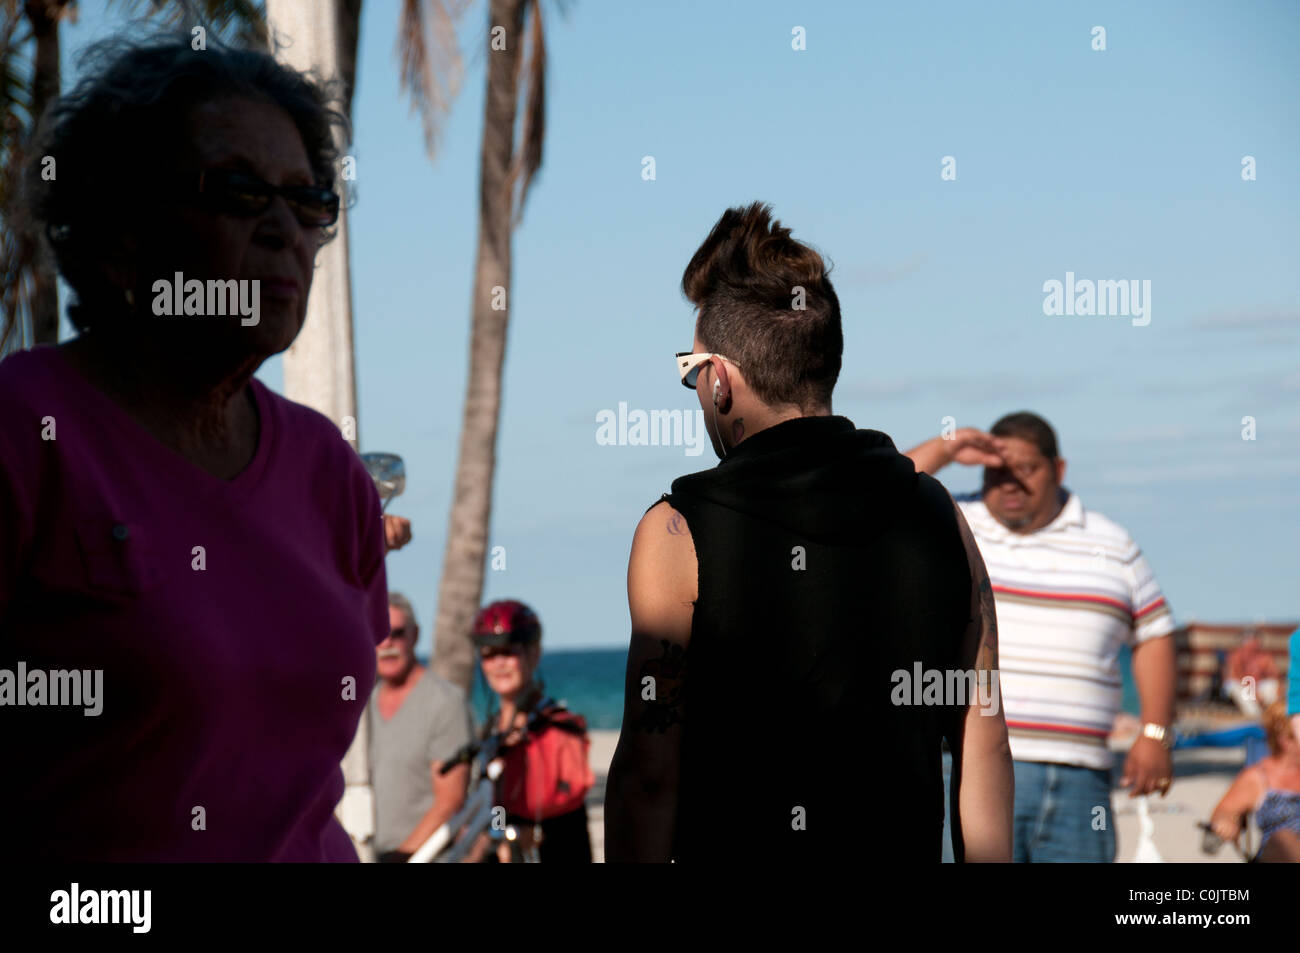 Man with strange hairstyle on Florida Beach. Stock Photo